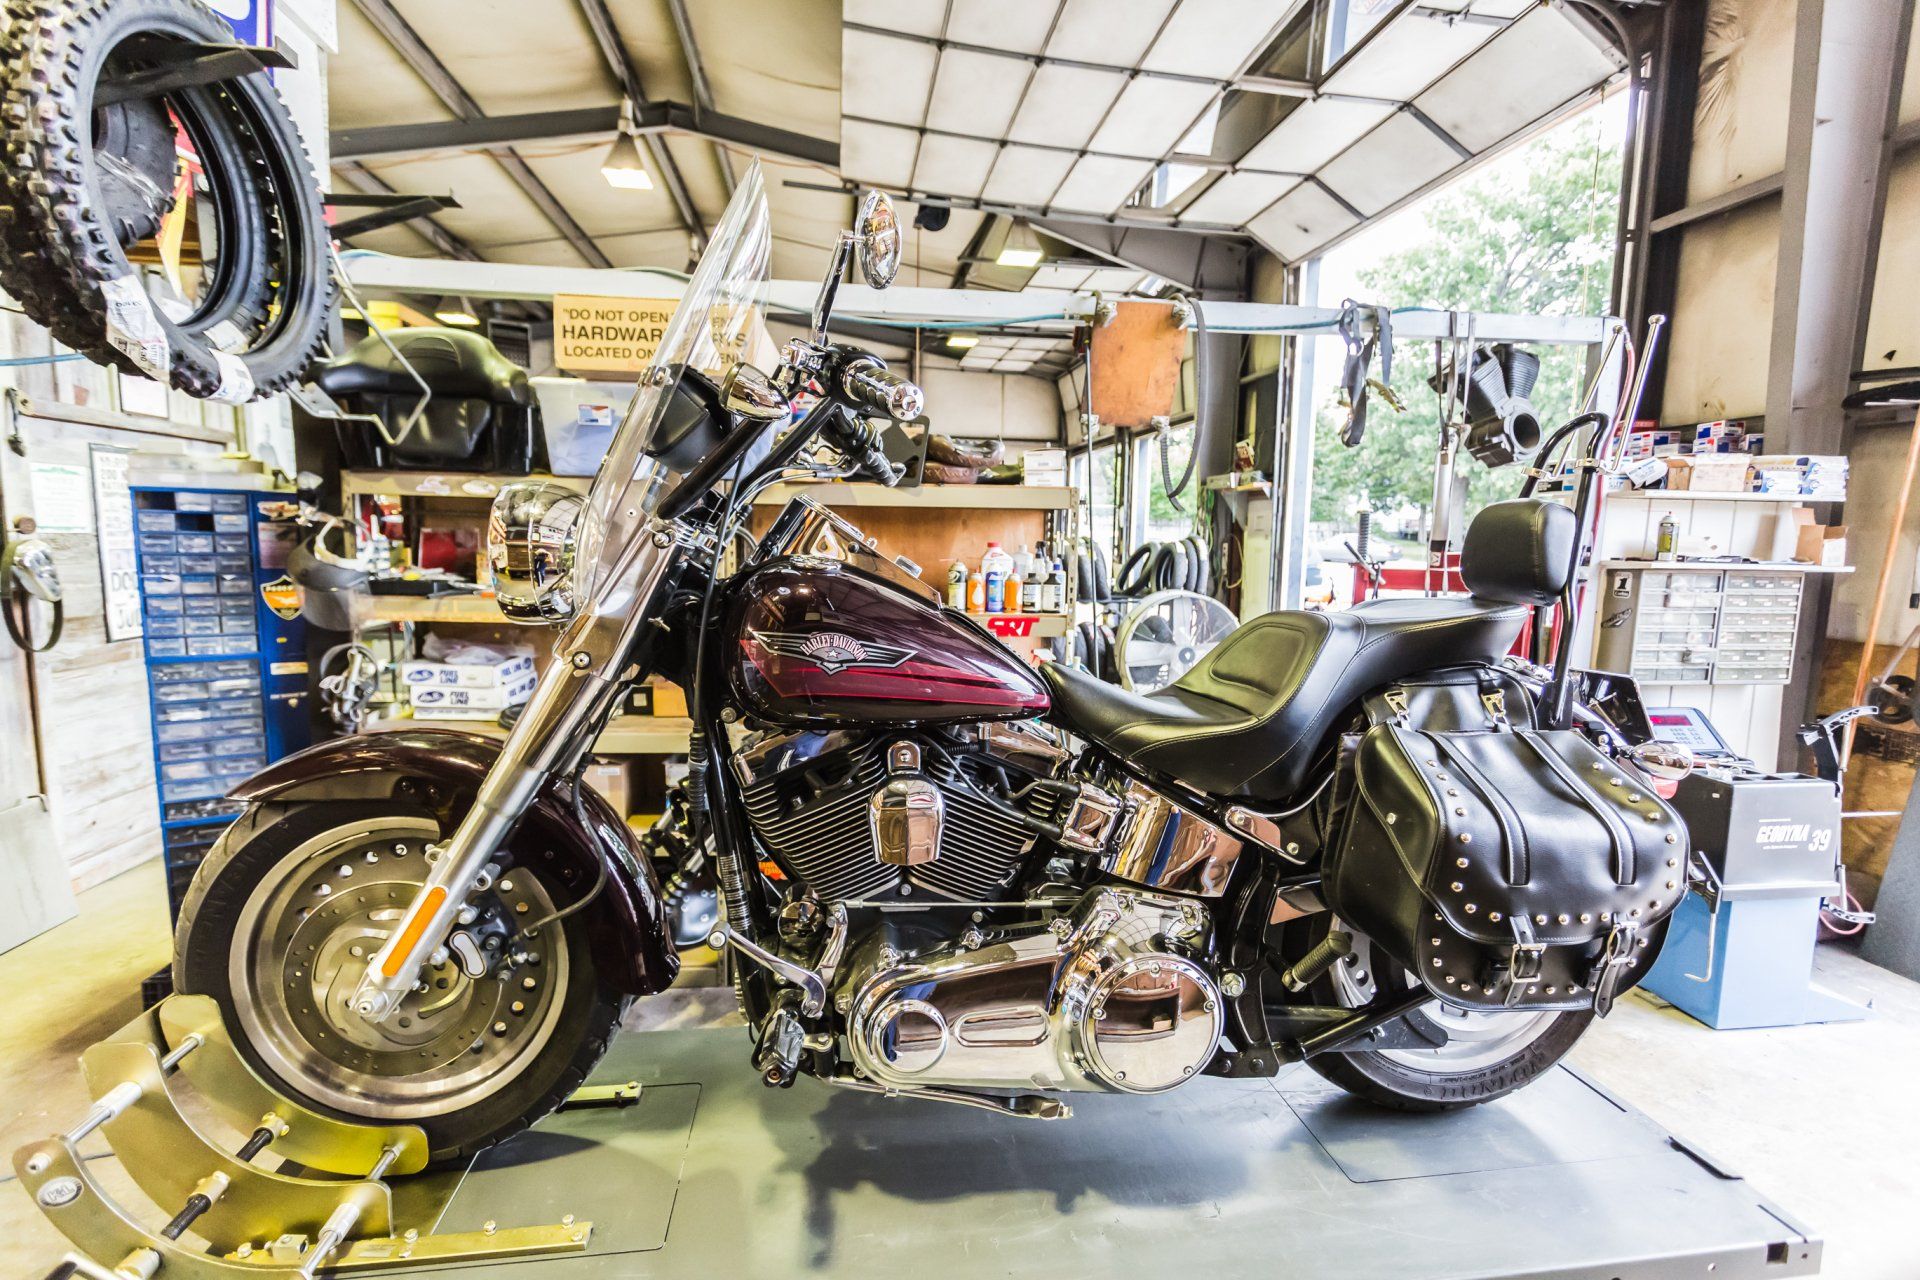 Maroon Harley Davidson Motorcycle at the Mike's 71 Cycle Shop